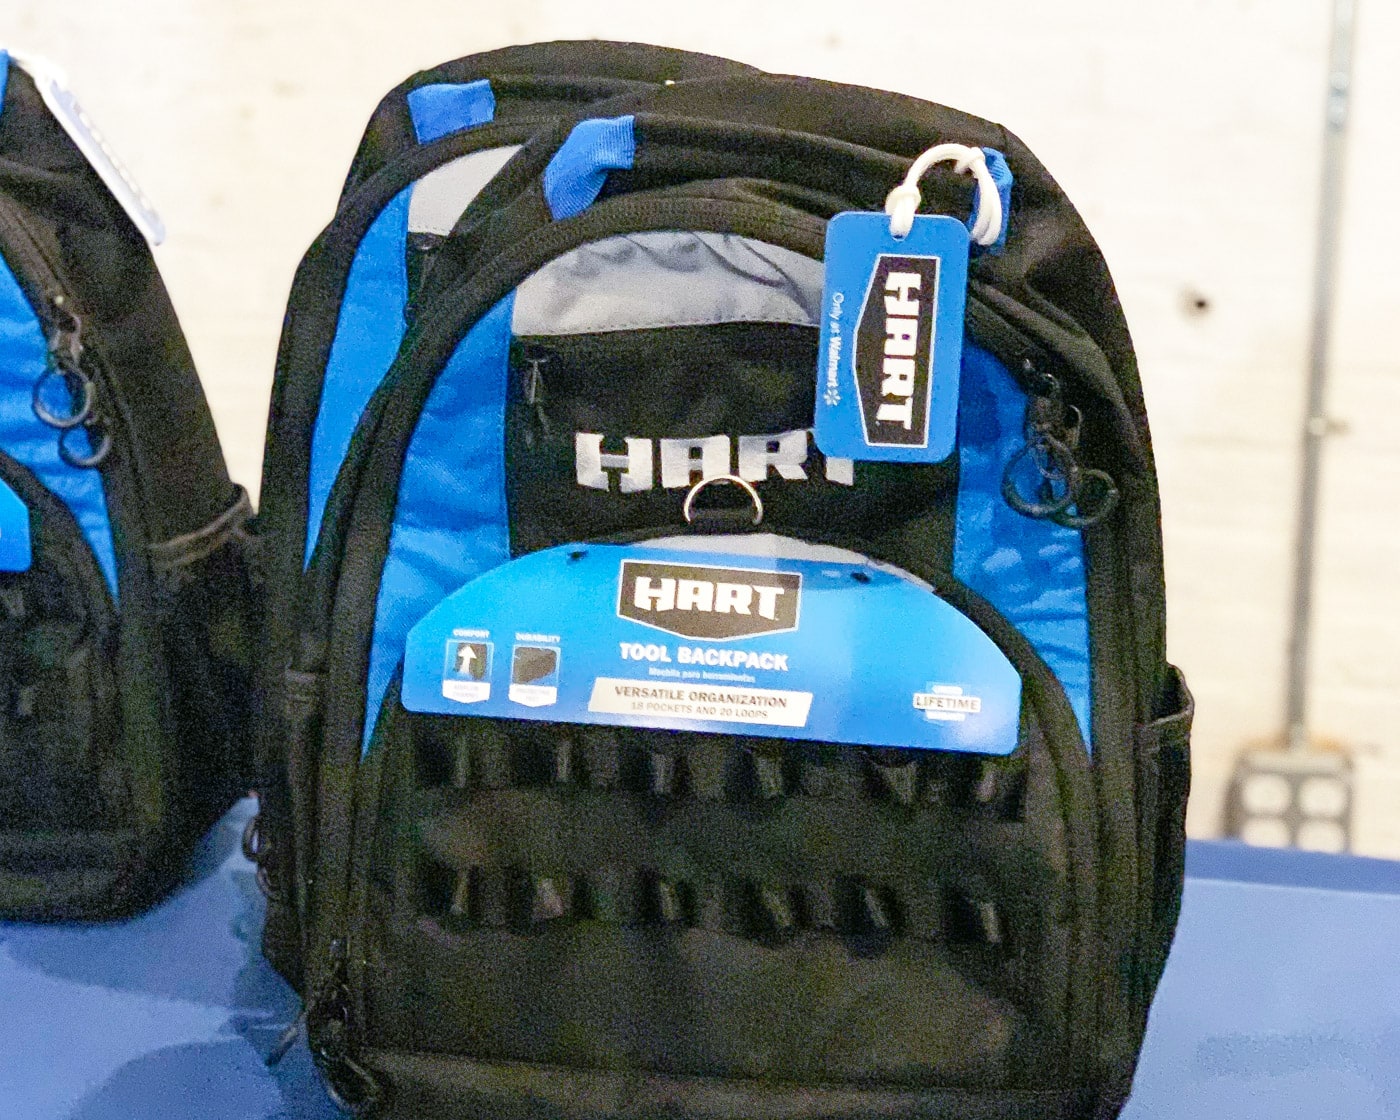 HART tool backpack